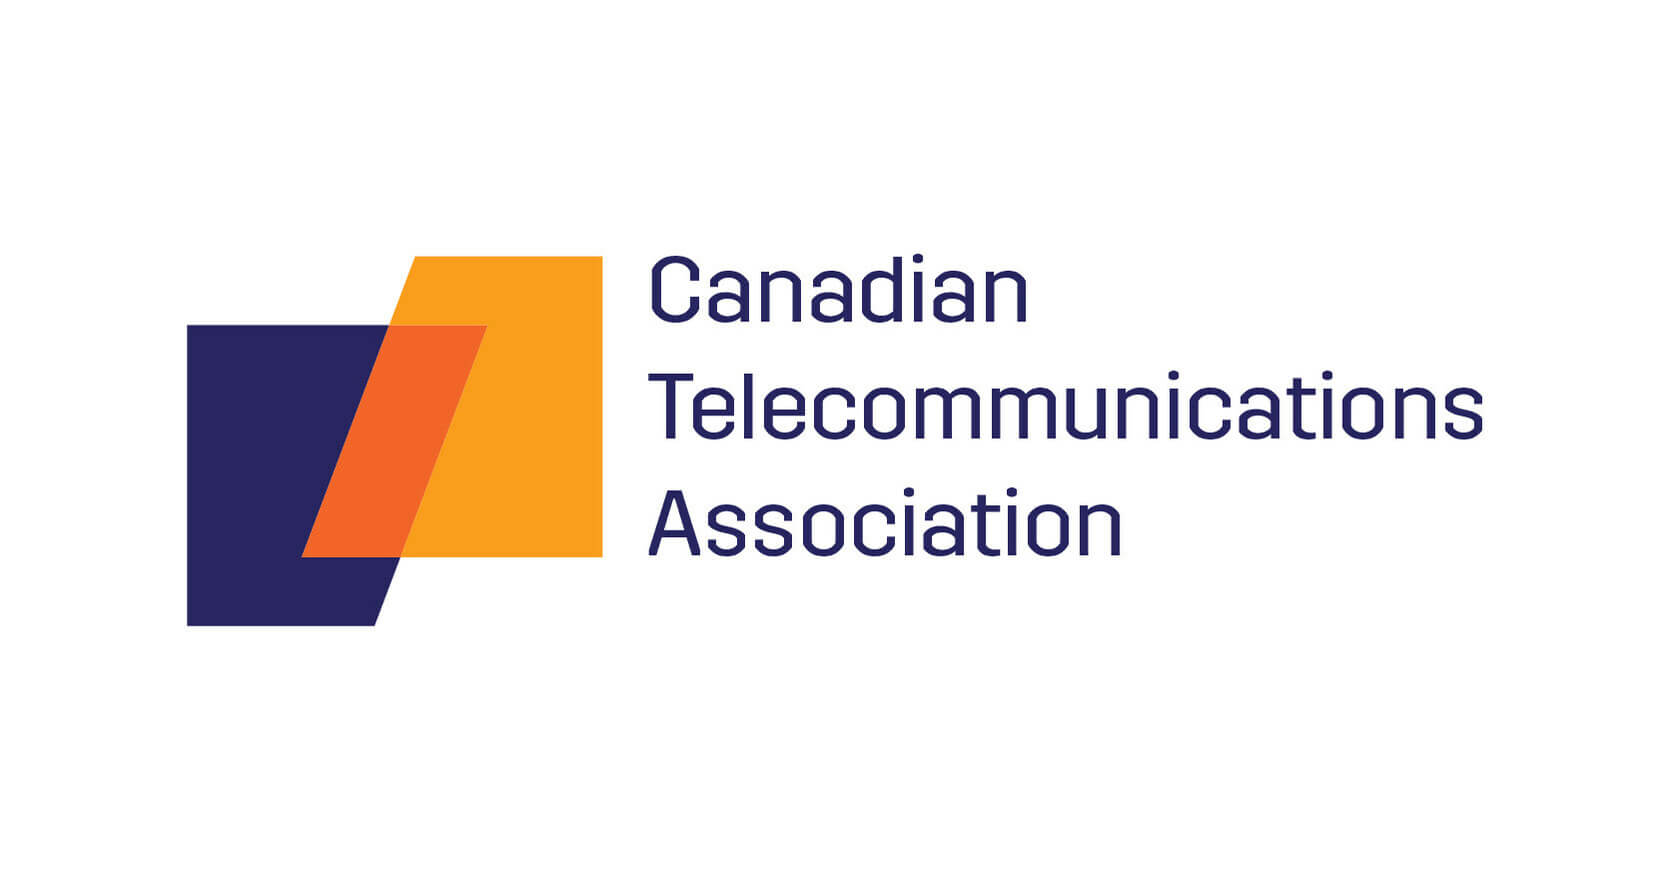 Canadian Telecommunications Association logo